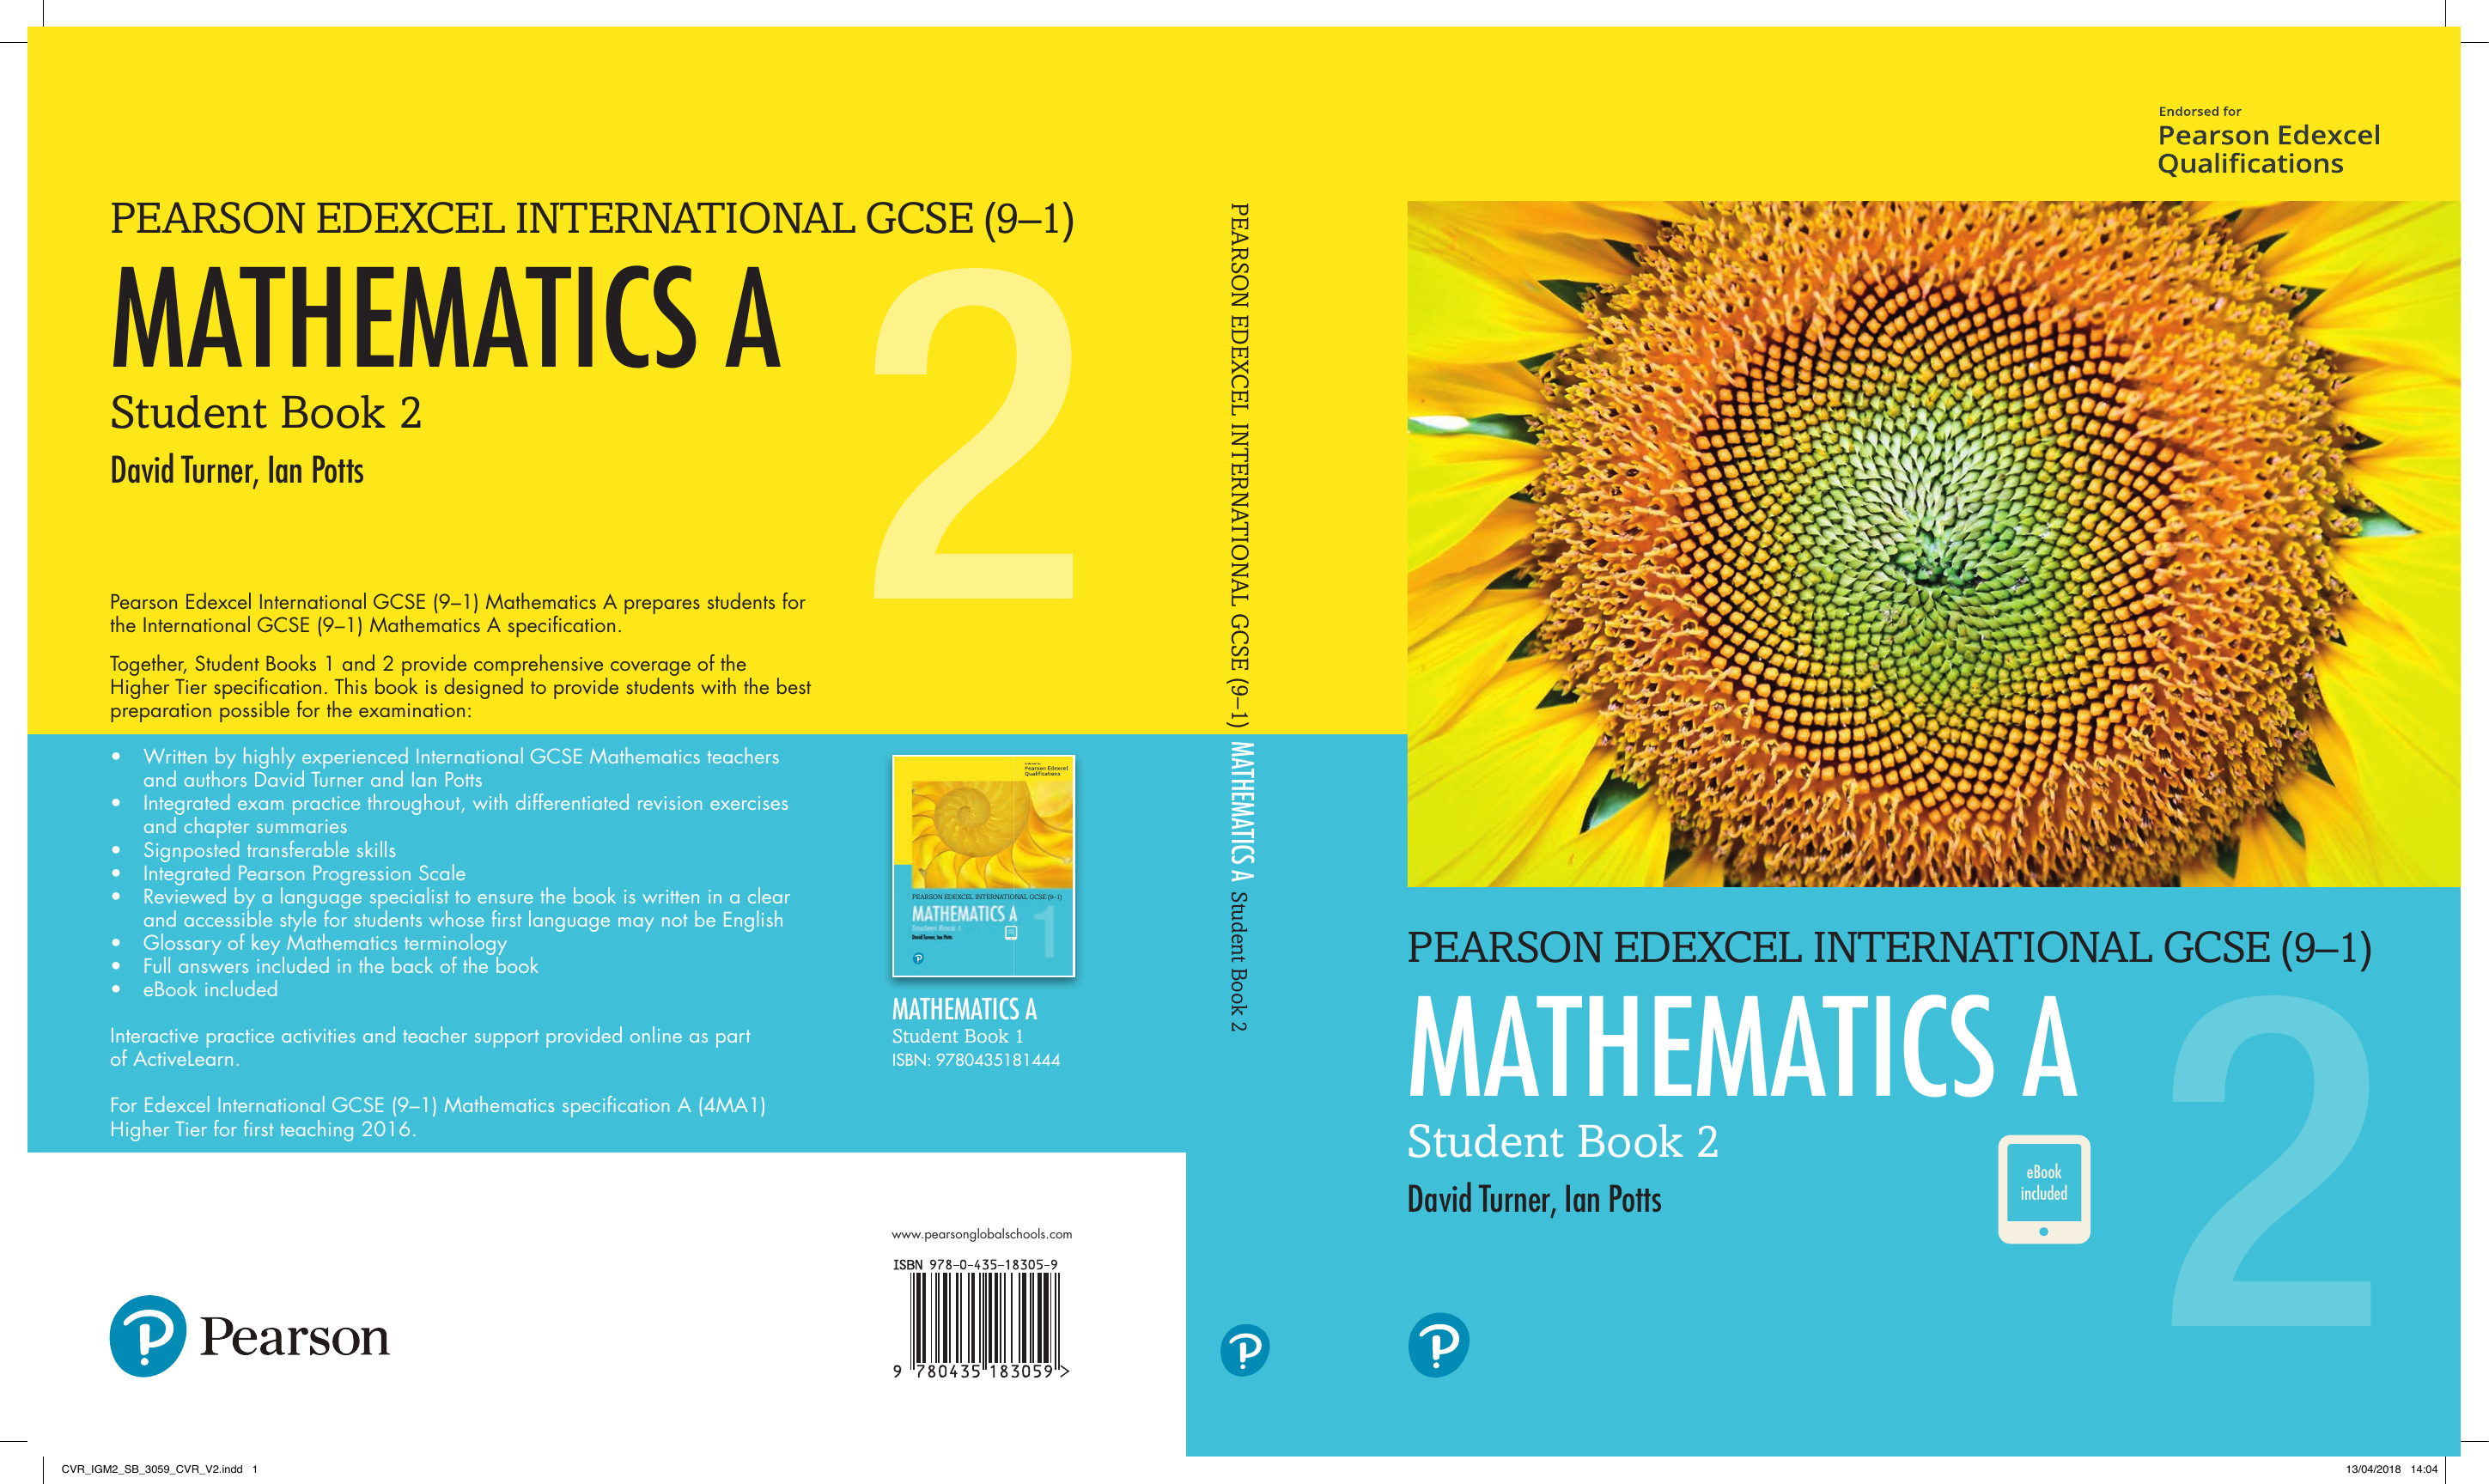 edexcel-international-gcse-9-1 -mathematics-a-student-book-2-by-d-a-turner-i-a-potts-leibniz-math.org